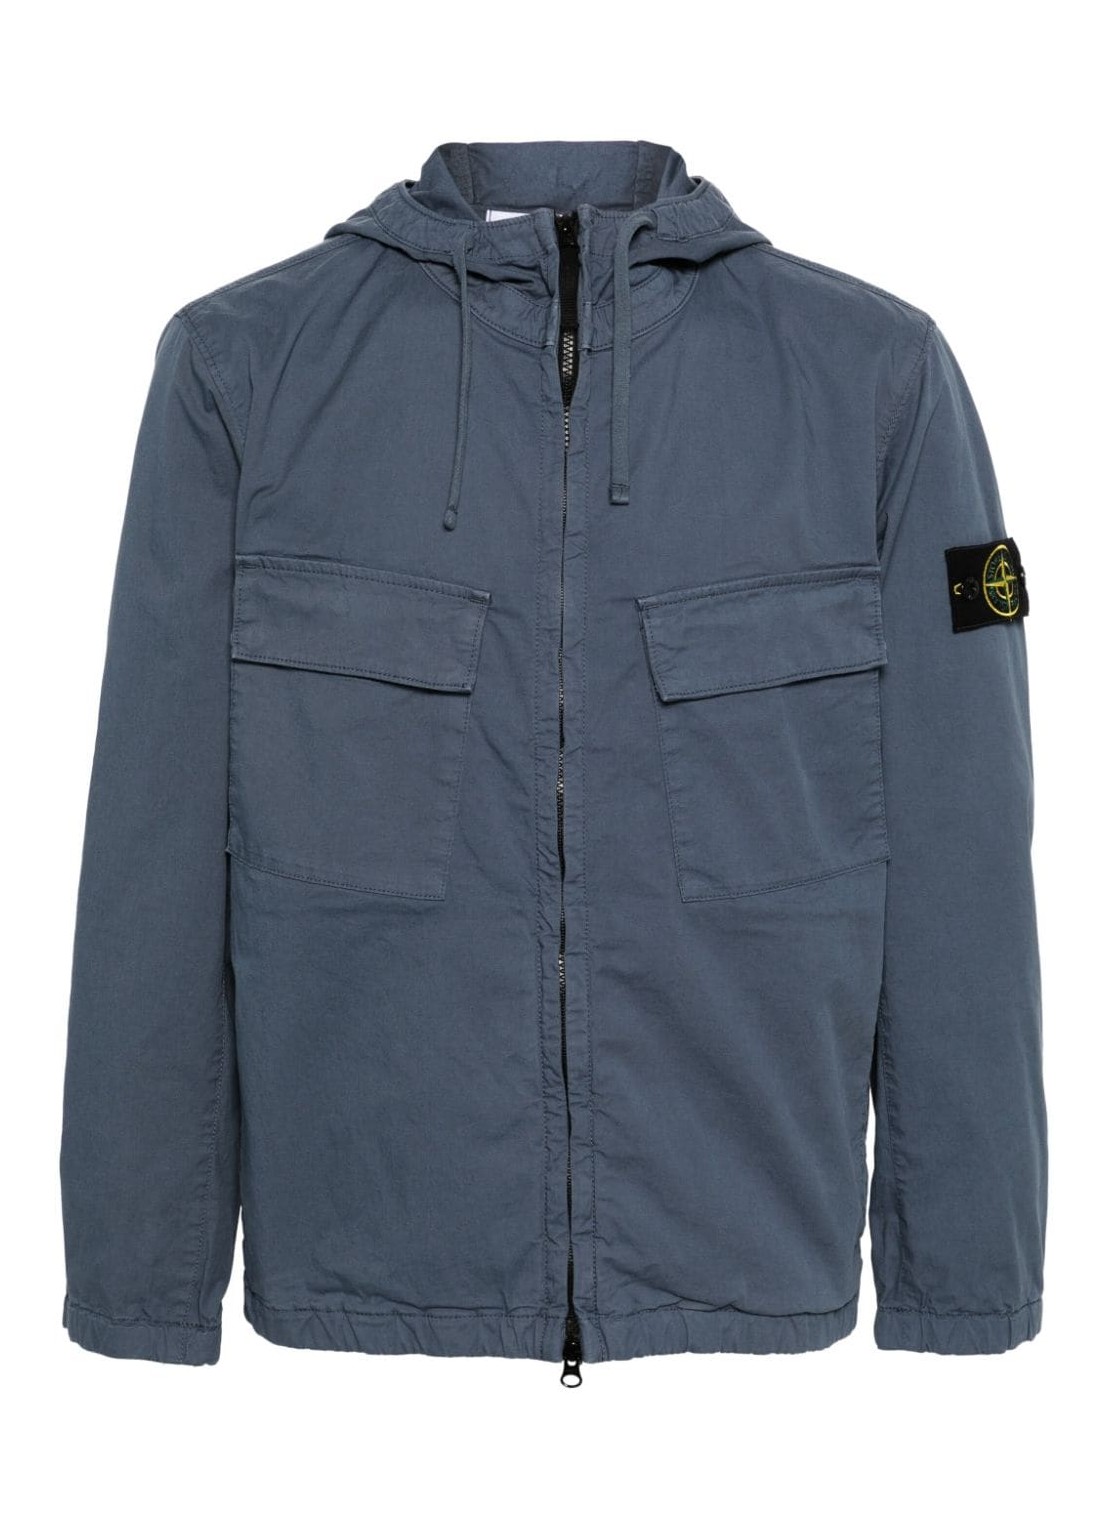 Outerwear stone island outerwear man jacket 801542610 v0024 talla L
 